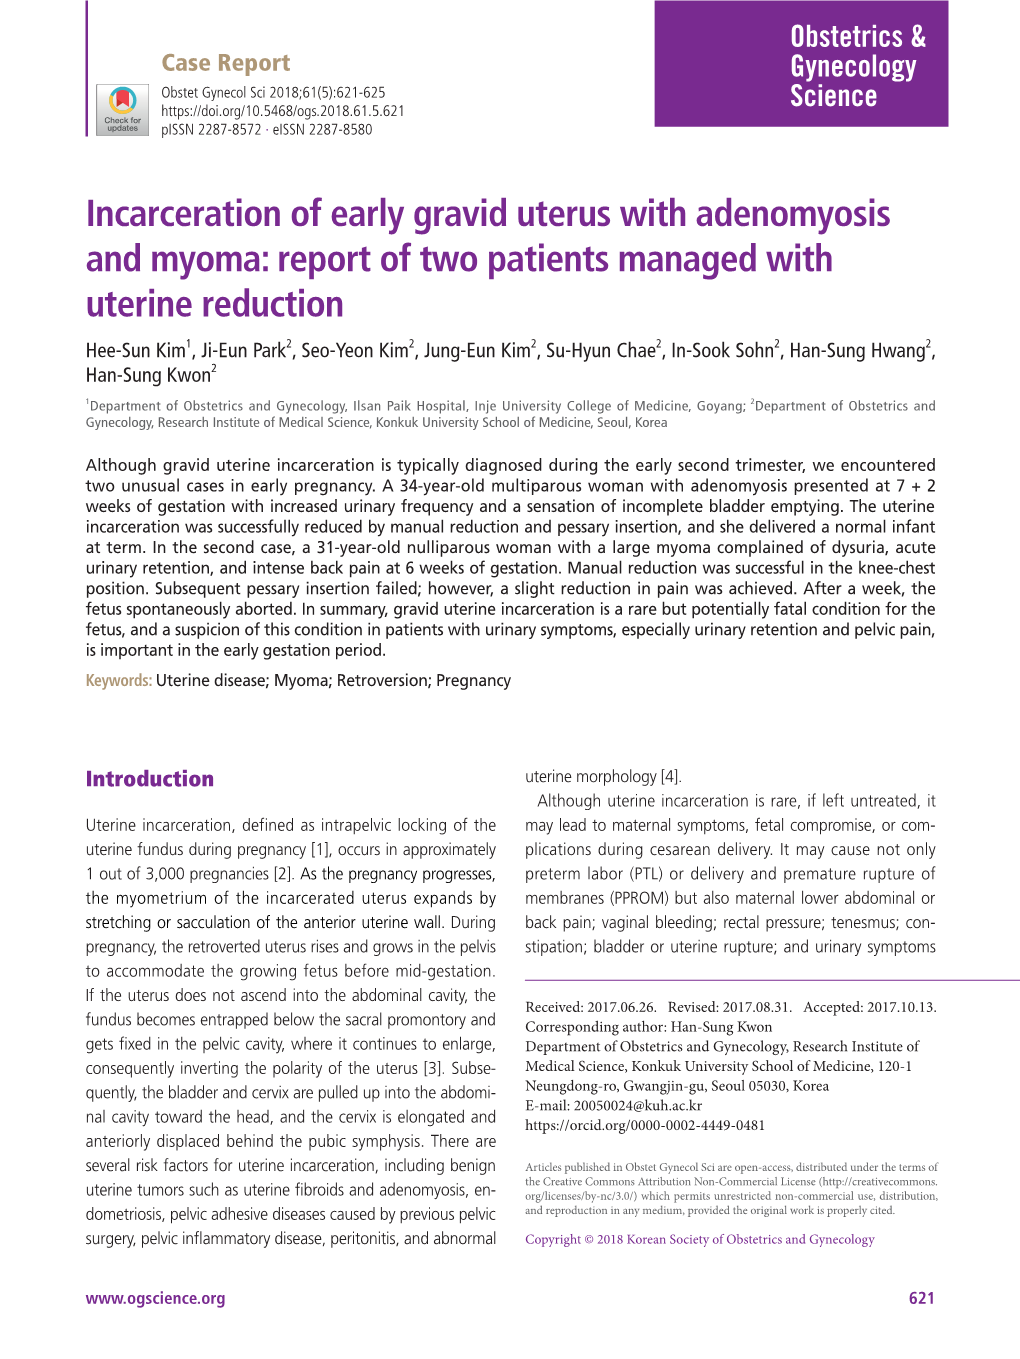 Incarceration of Early Gravid Uterus with Adenomyosis and Myoma